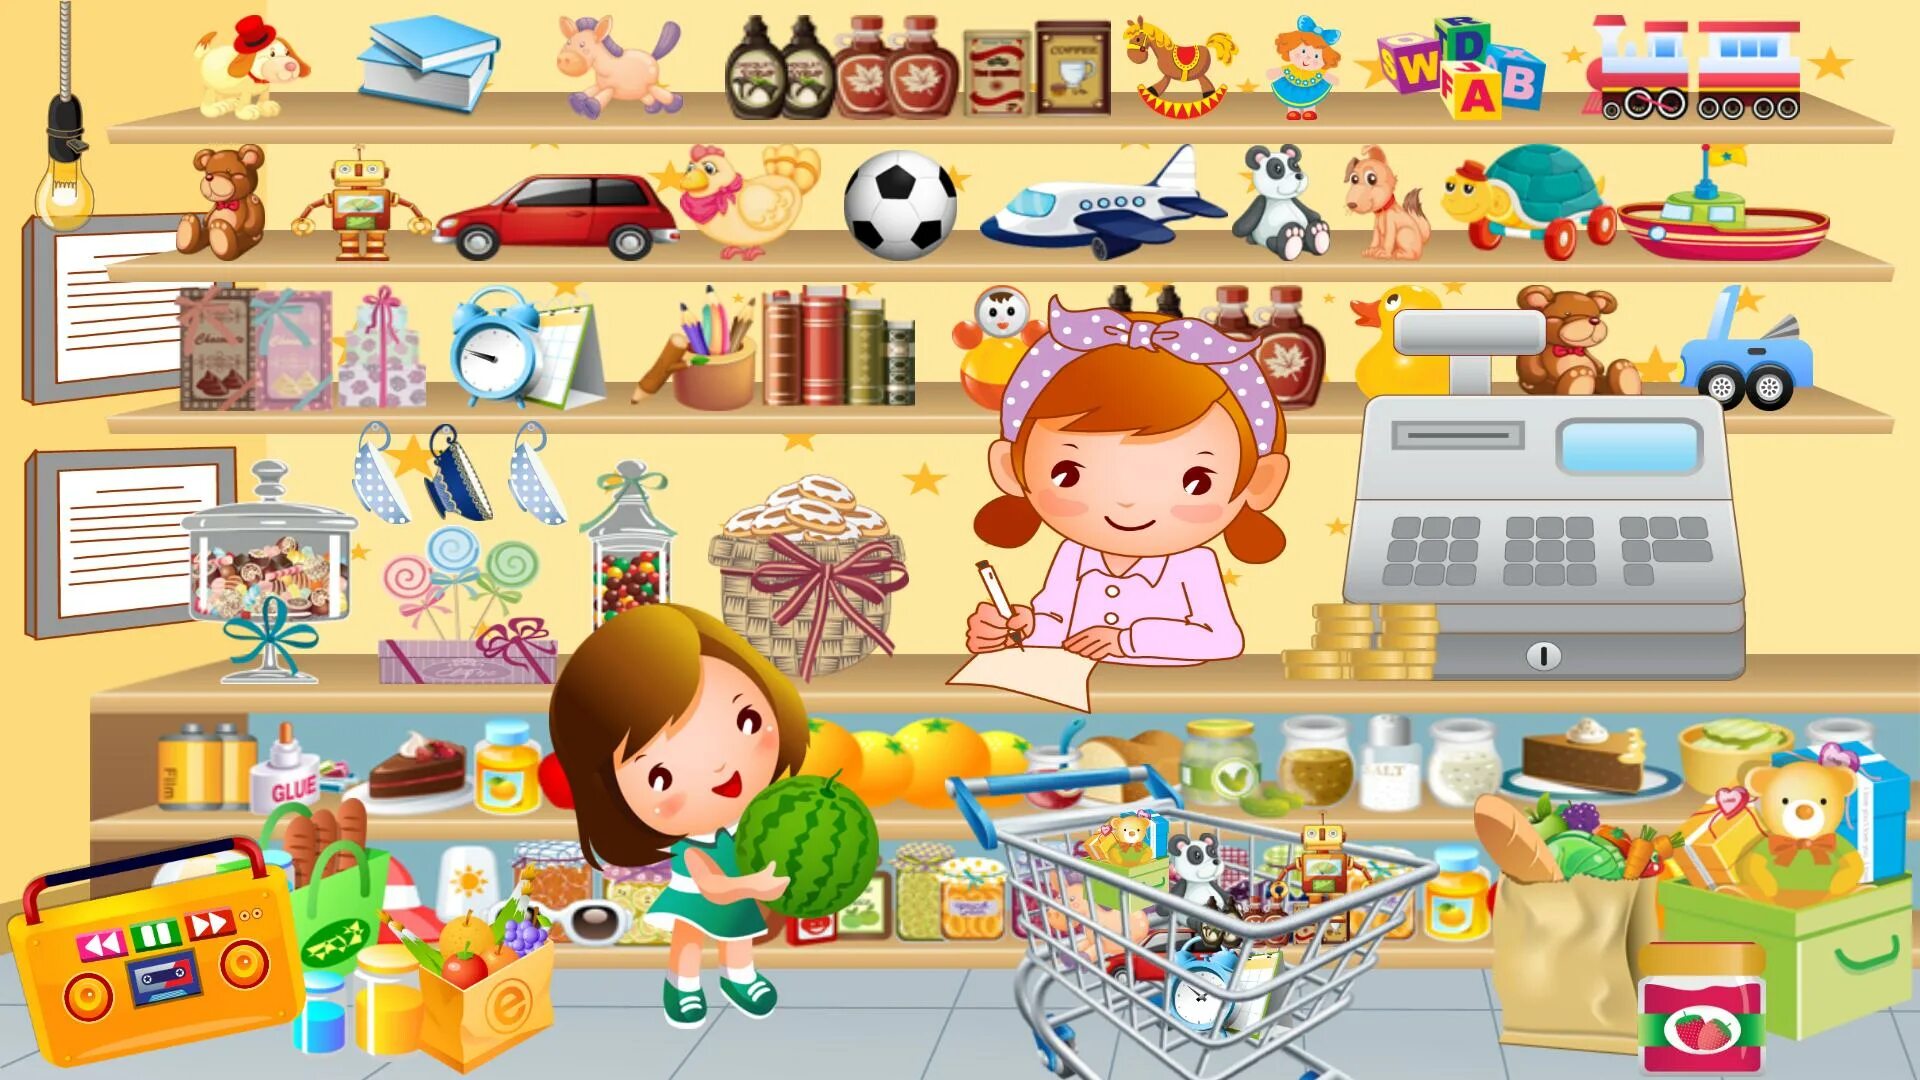 Магазин игрушек картинка для детей. Магазин игрушек для детей. Ребенок в магазине. Игра магазин для детей.